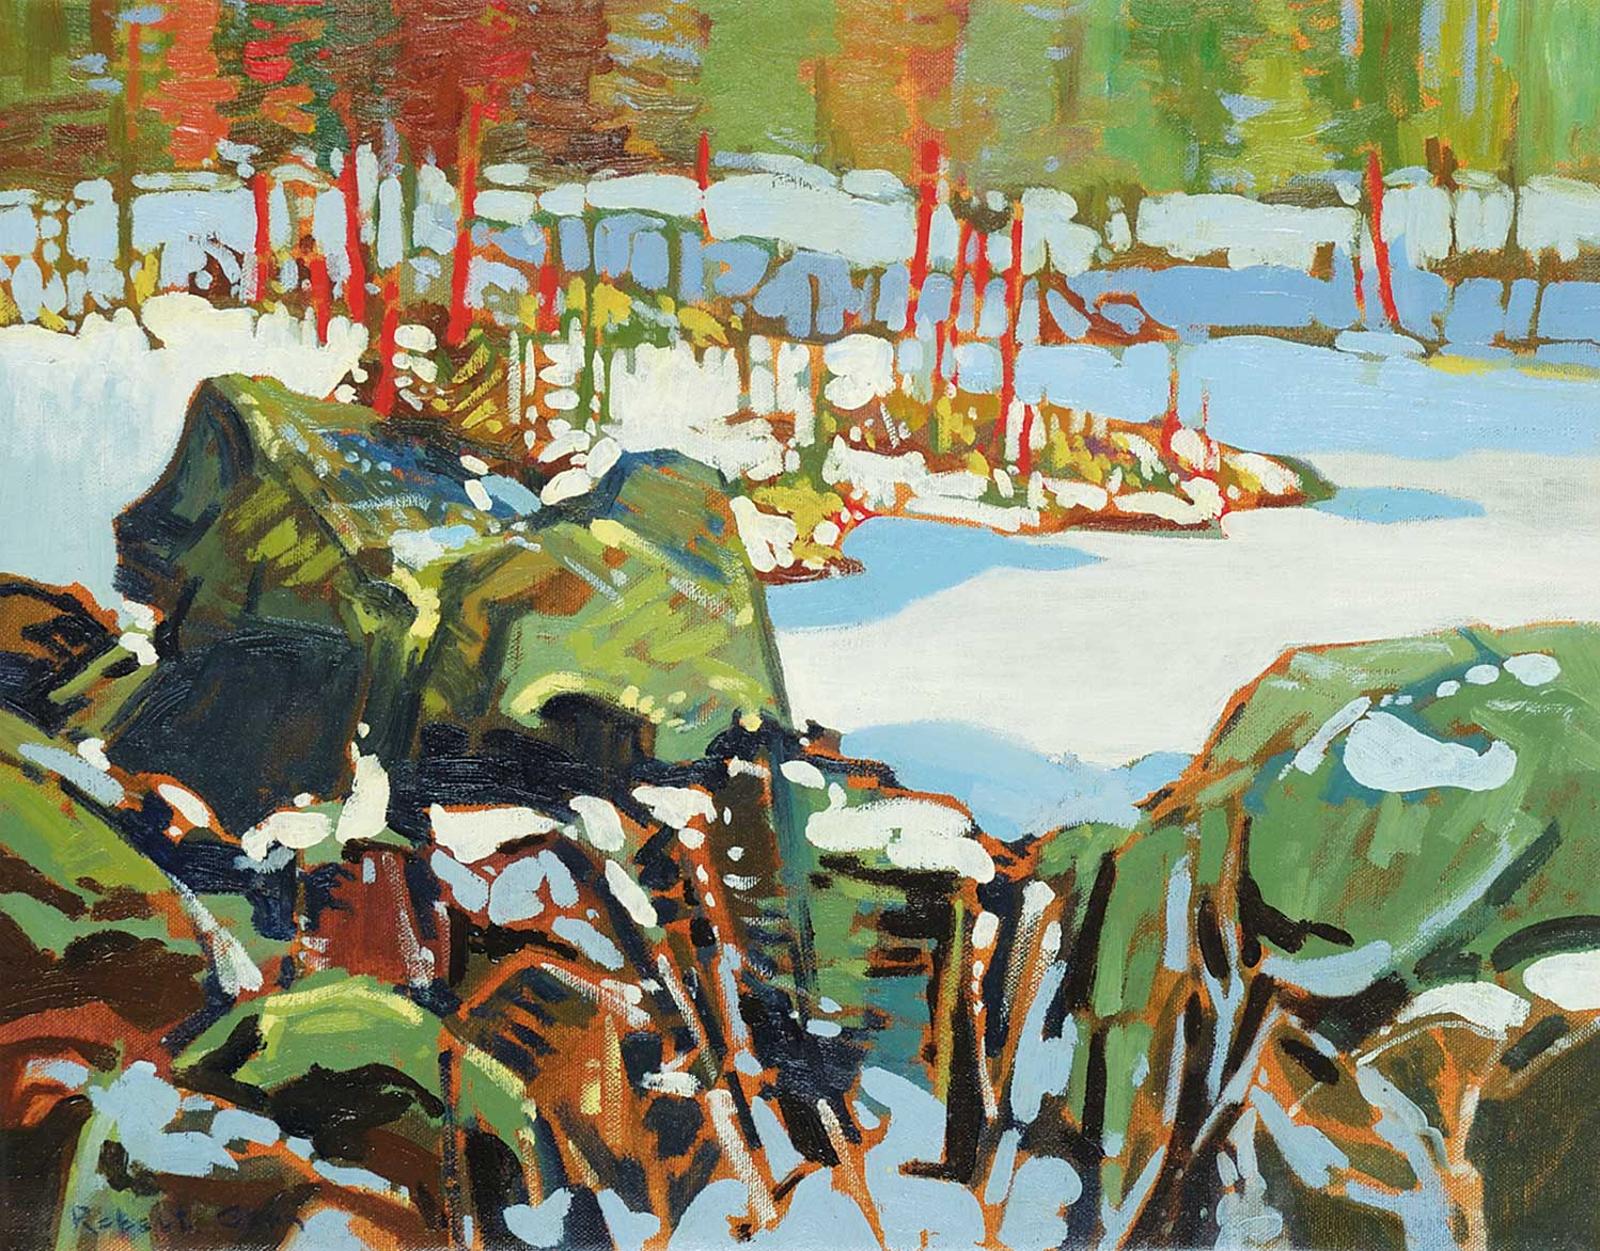 Robert Douglas Genn (1936-2014) - Untitled - Winter's Riverbank